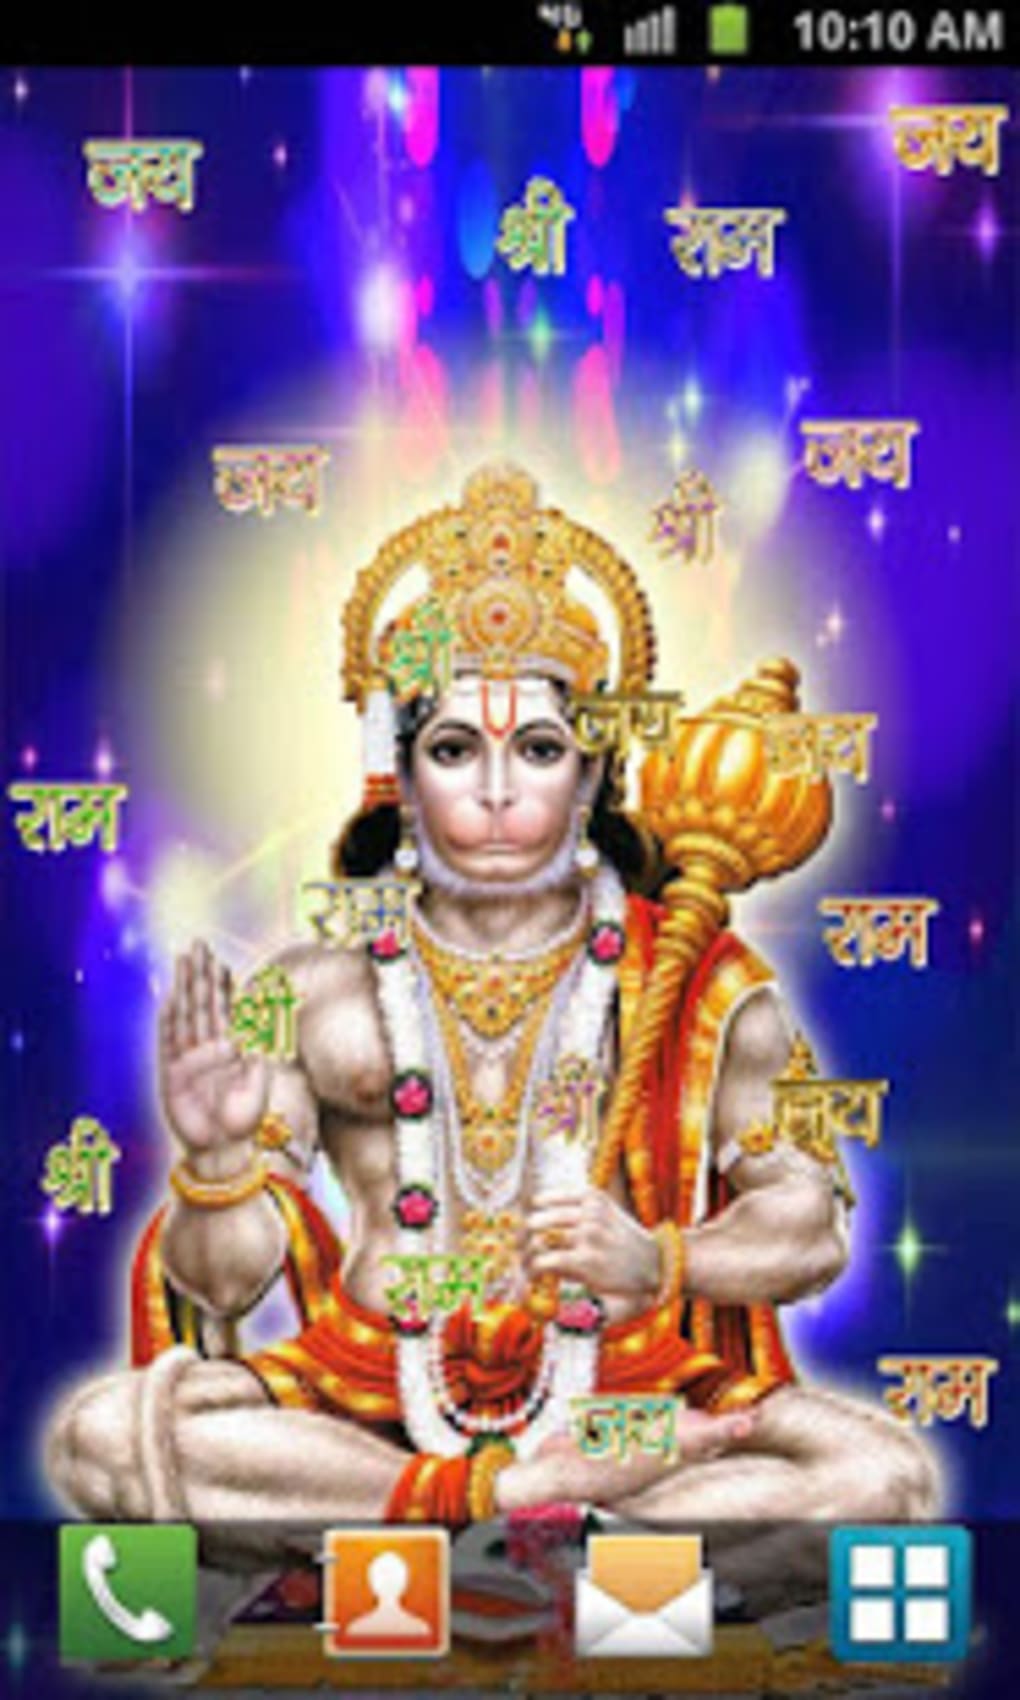 Hanuman Live Wallpaper APK for Android - Download